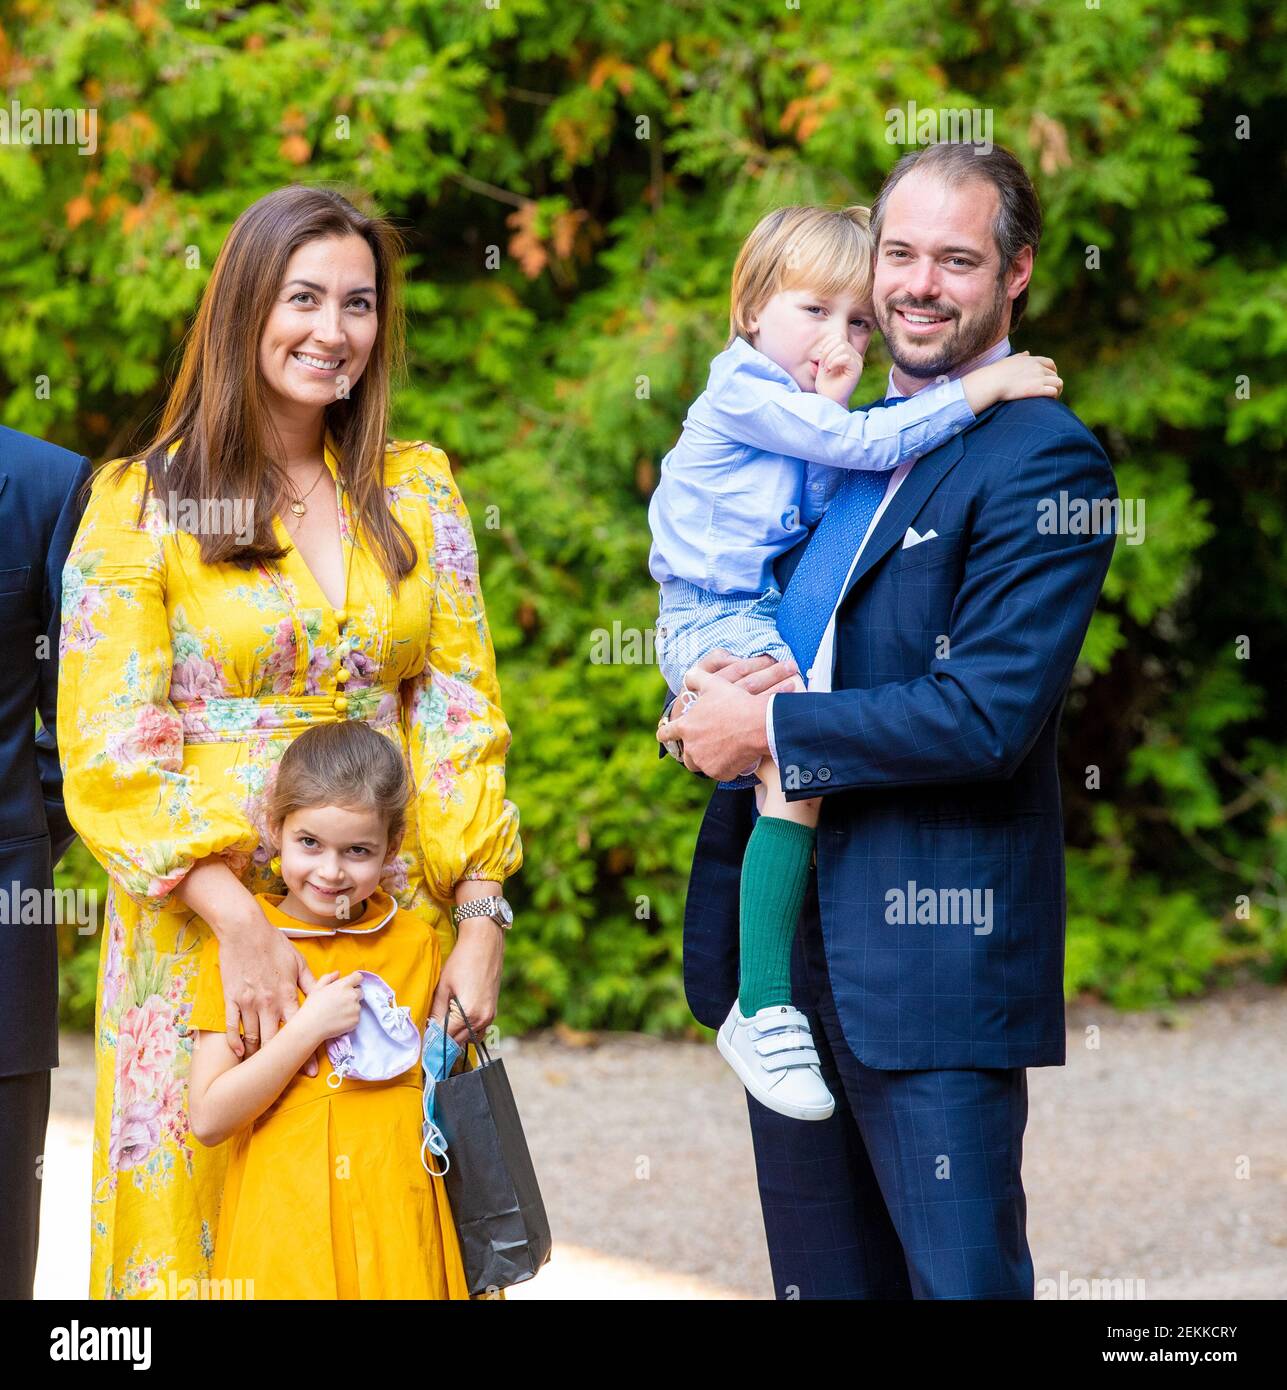 Luxembourg's Princess Amalia turns 6 with unicorn and rainbow